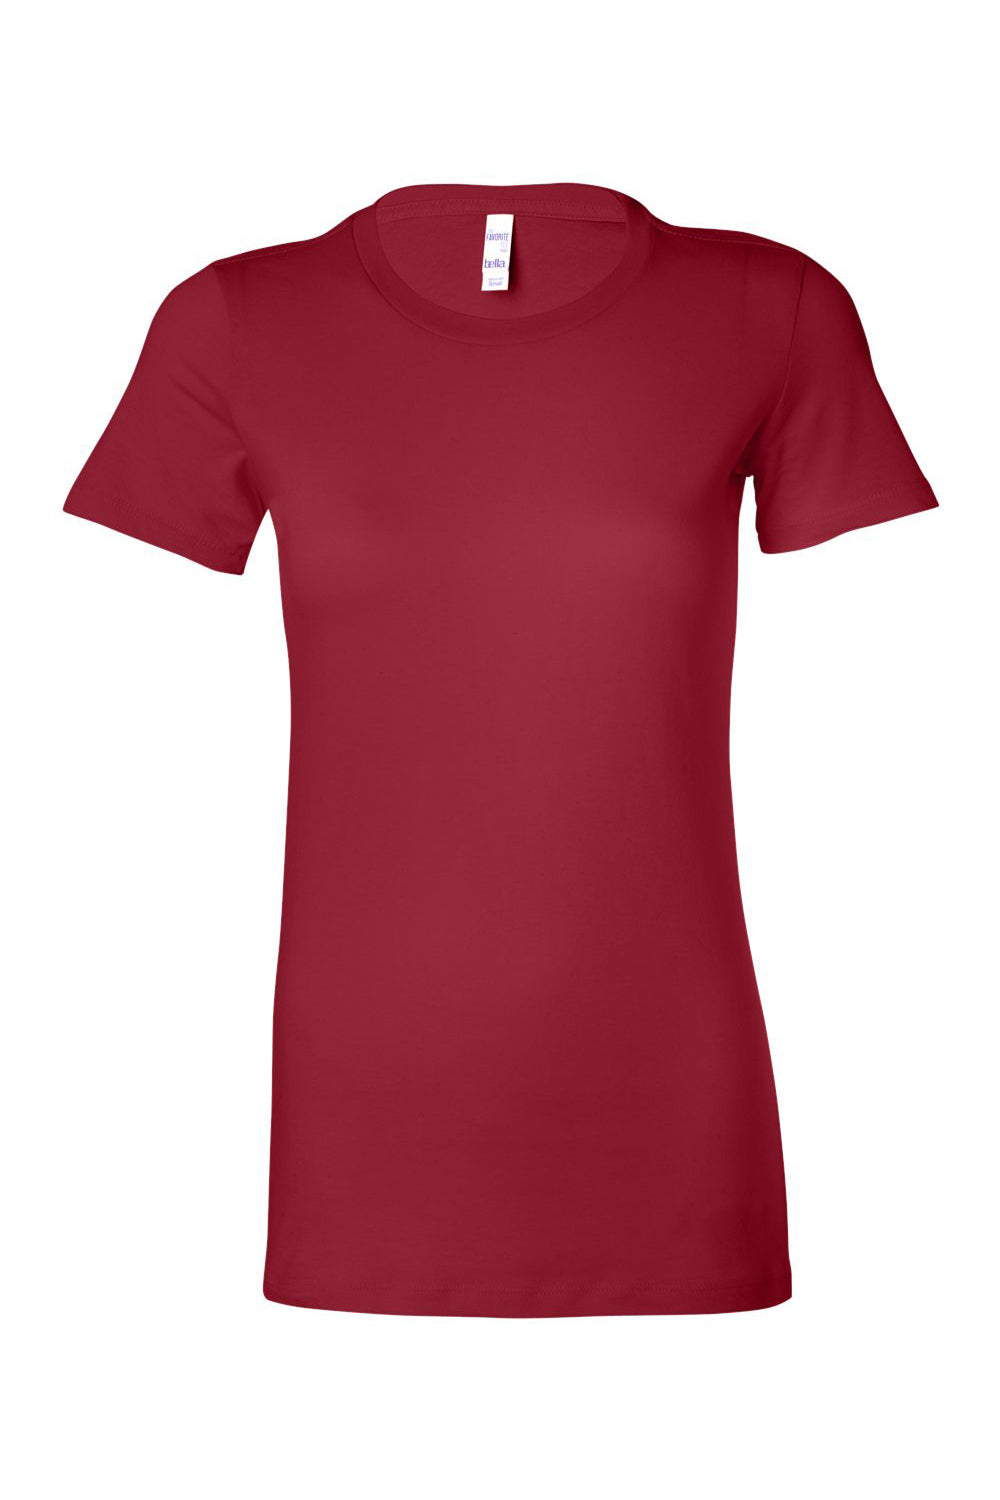 Bella + Canvas BC6004/6004 Womens The Favorite Short Sleeve Crewneck T-Shirt Cardinal Red Flat Front